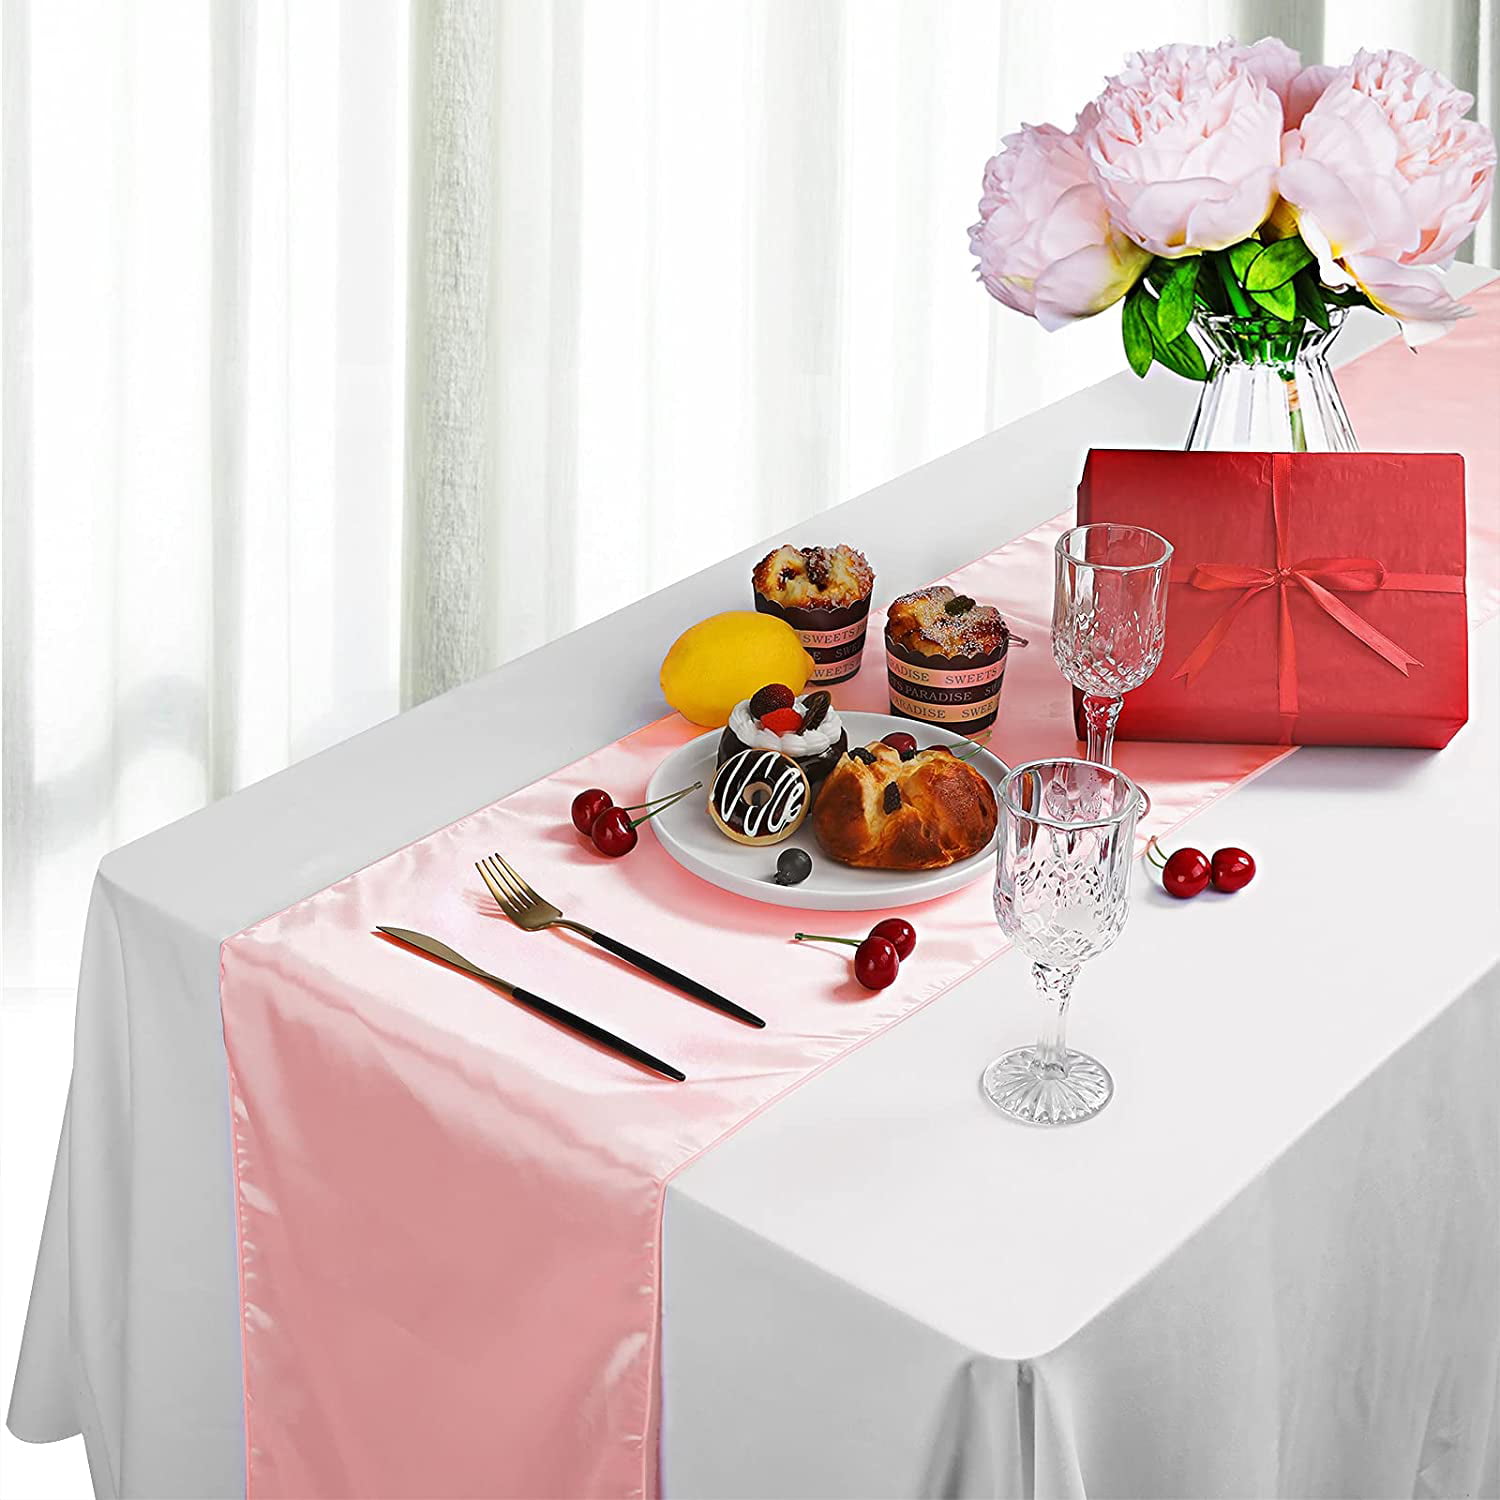 TABLE NAPKINS SATIN STRIPE REGAL GOOD QUALITY WEDDINGS EVENTS XMAS 07 COLORS 